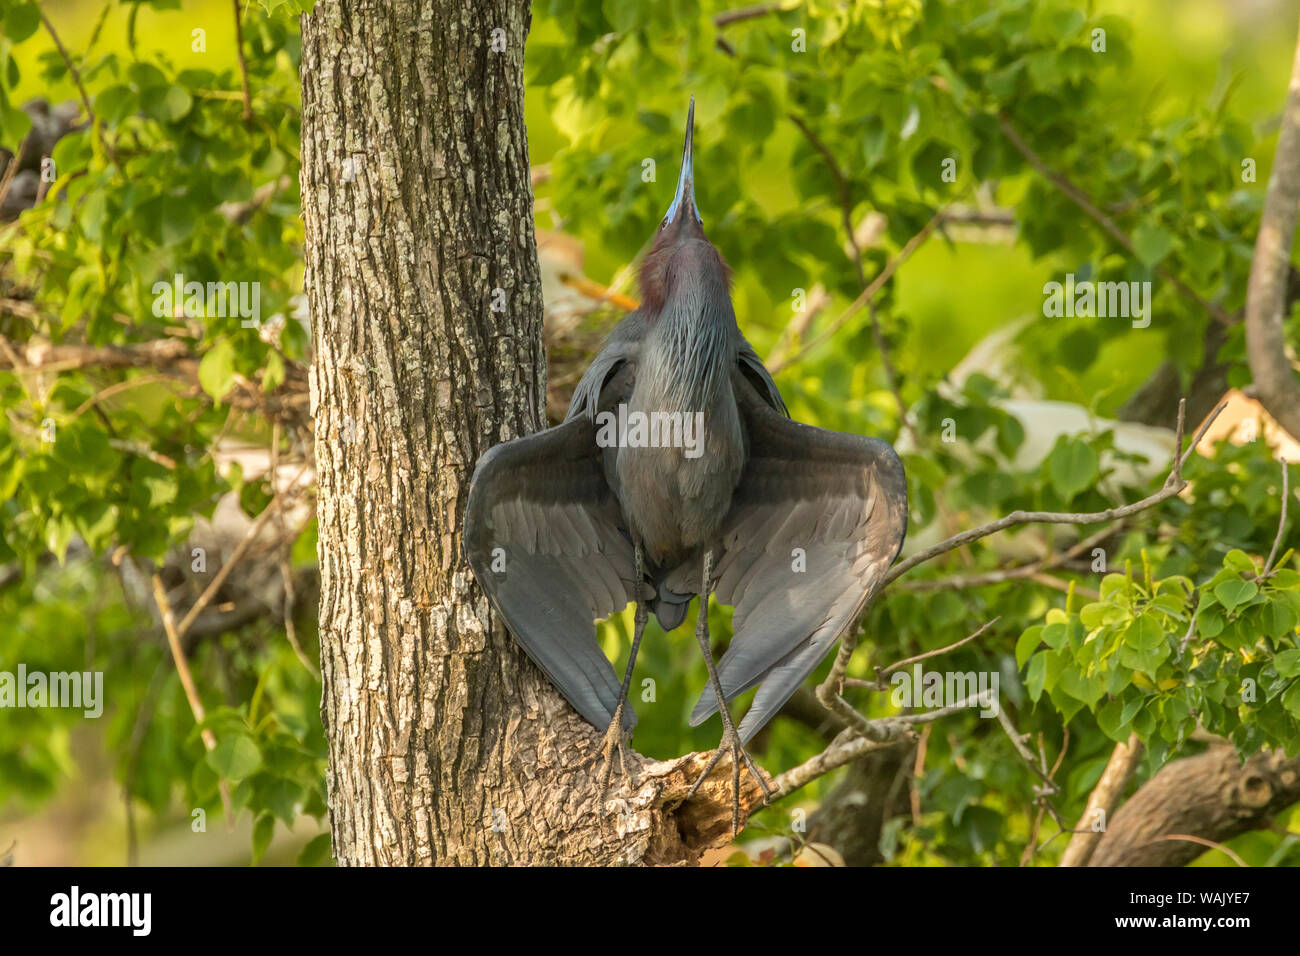 USA, Louisiana, Vermilion Parish. Little blue heron male courtship display. Credit as: Cathy and Gordon Illg / Jaynes Gallery / DanitaDelimont.com Stock Photo